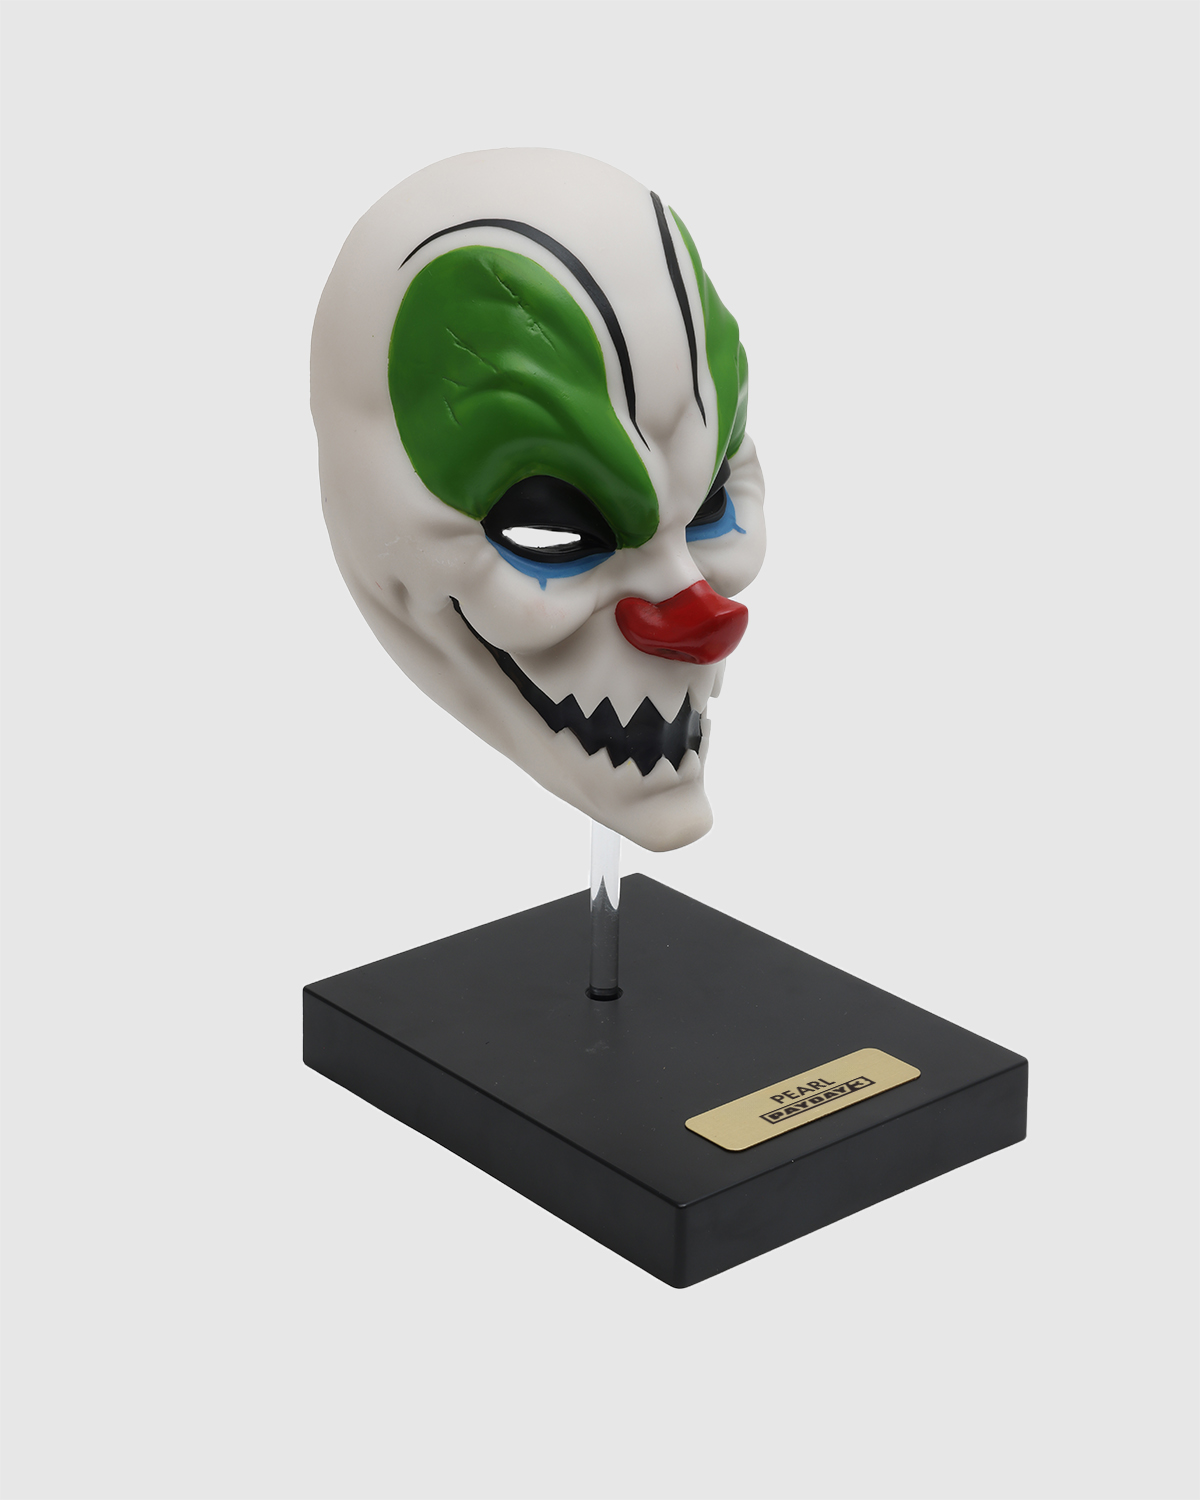 Limited Edition 1:2 scale Desktop Replica "Pearl Mask"